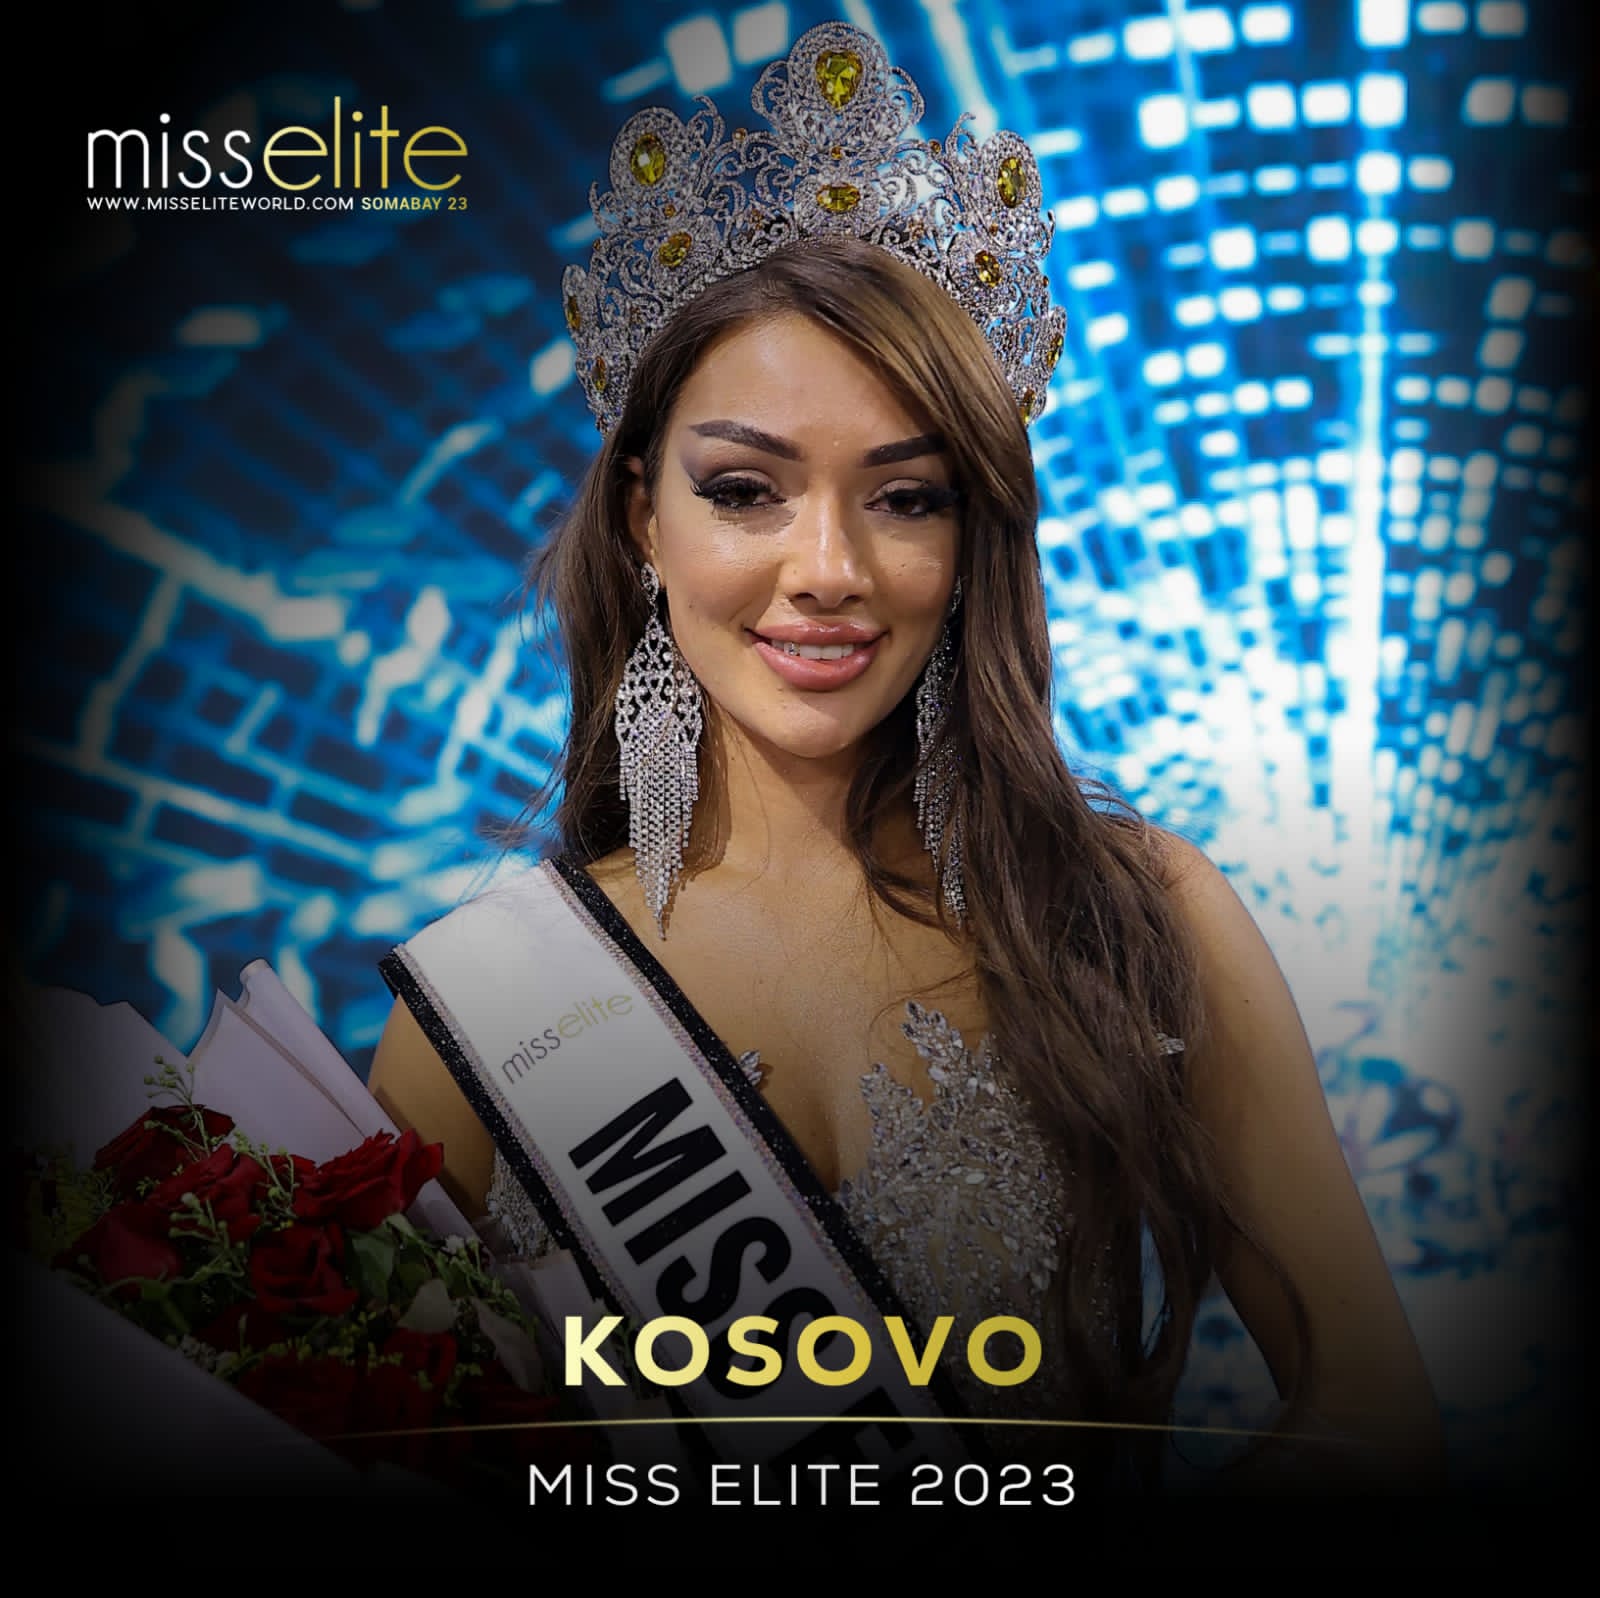 Miss Kosovo, Mejreme Hajdaraj is Miss Elite 2023